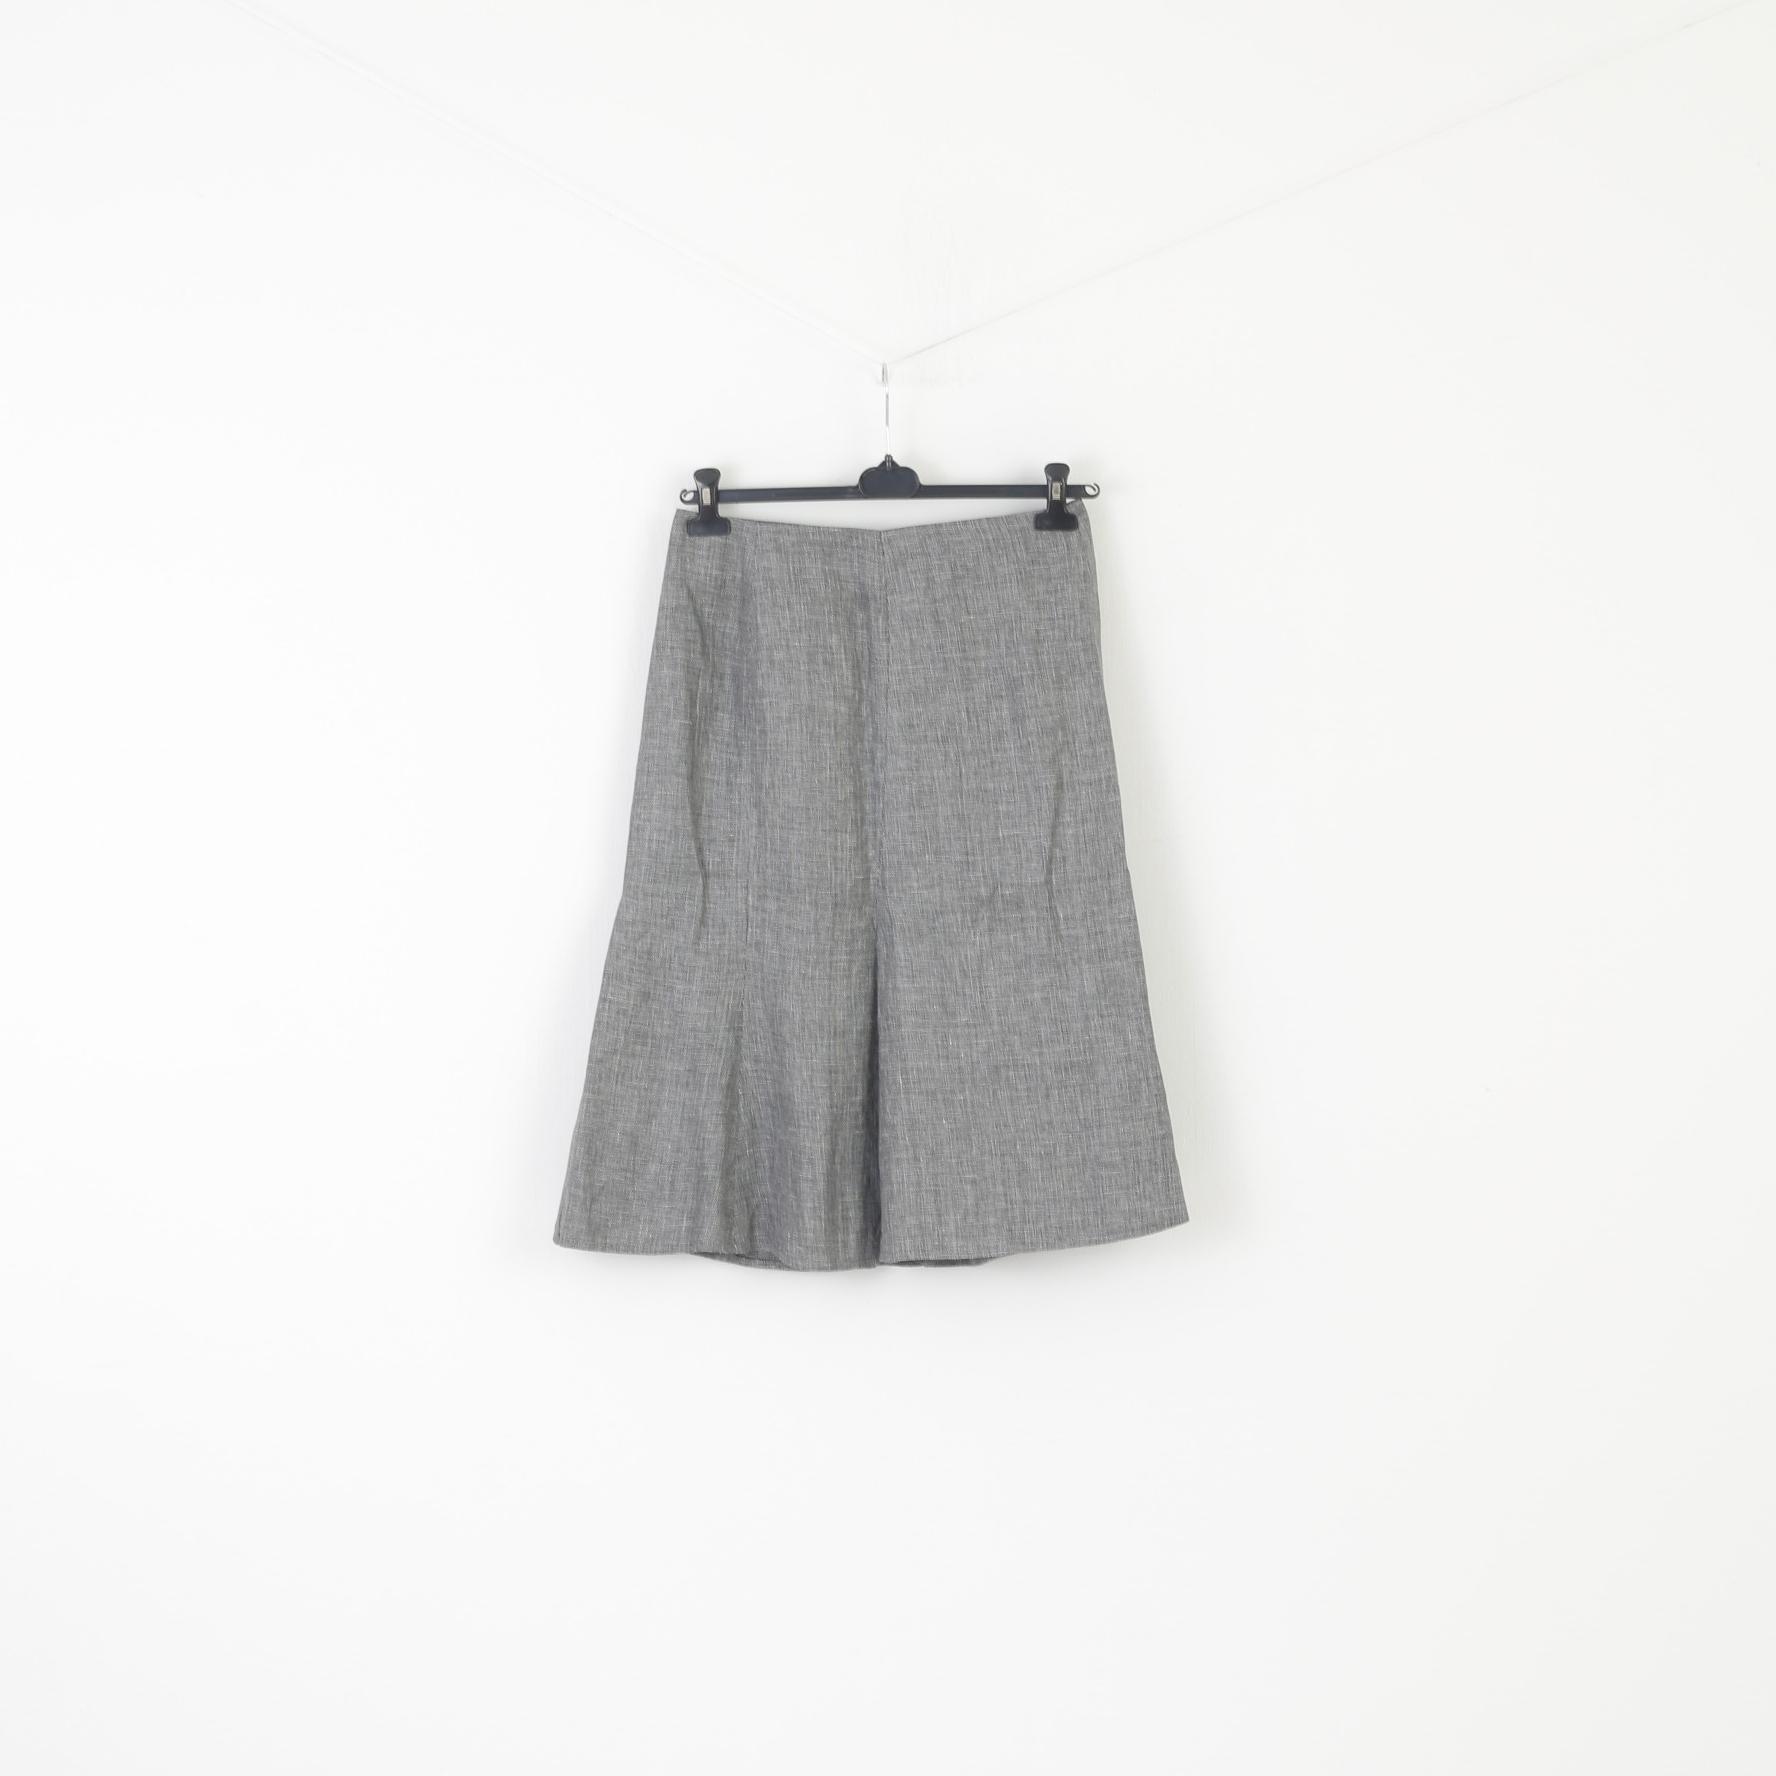 Elegance Paris Women 40 Skirt Grey Vintage